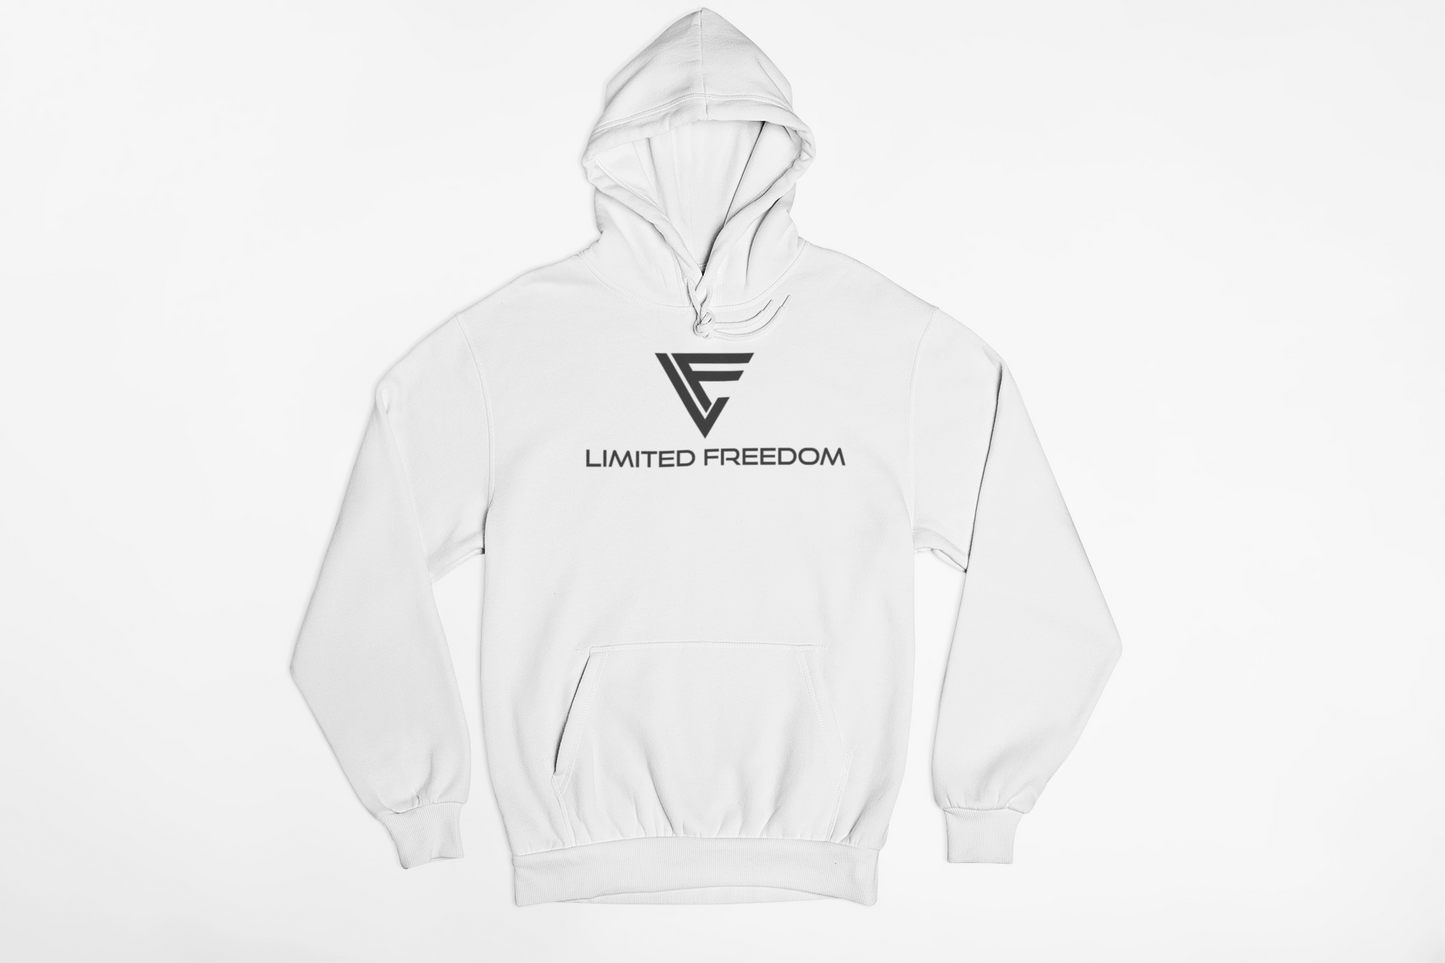 L.F Limited Freedom Hooded Sweatshirt